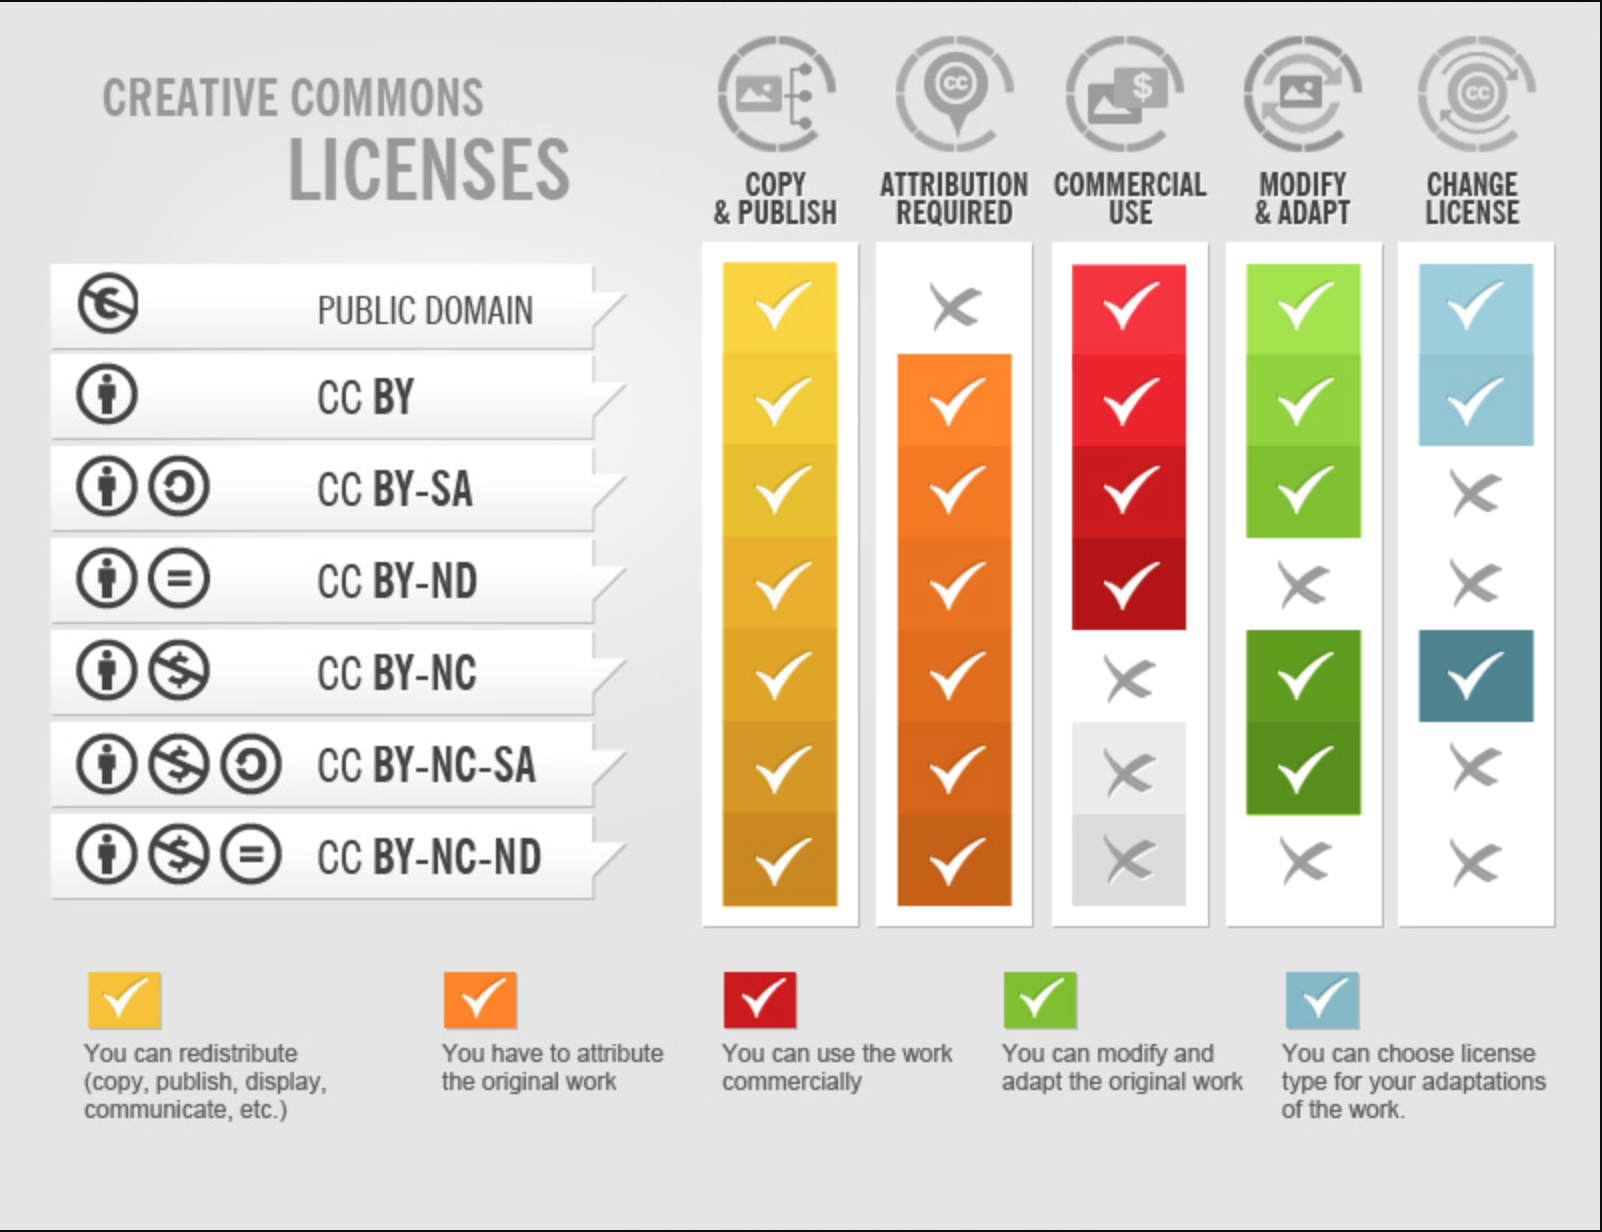 Description of Creative Commons licenses